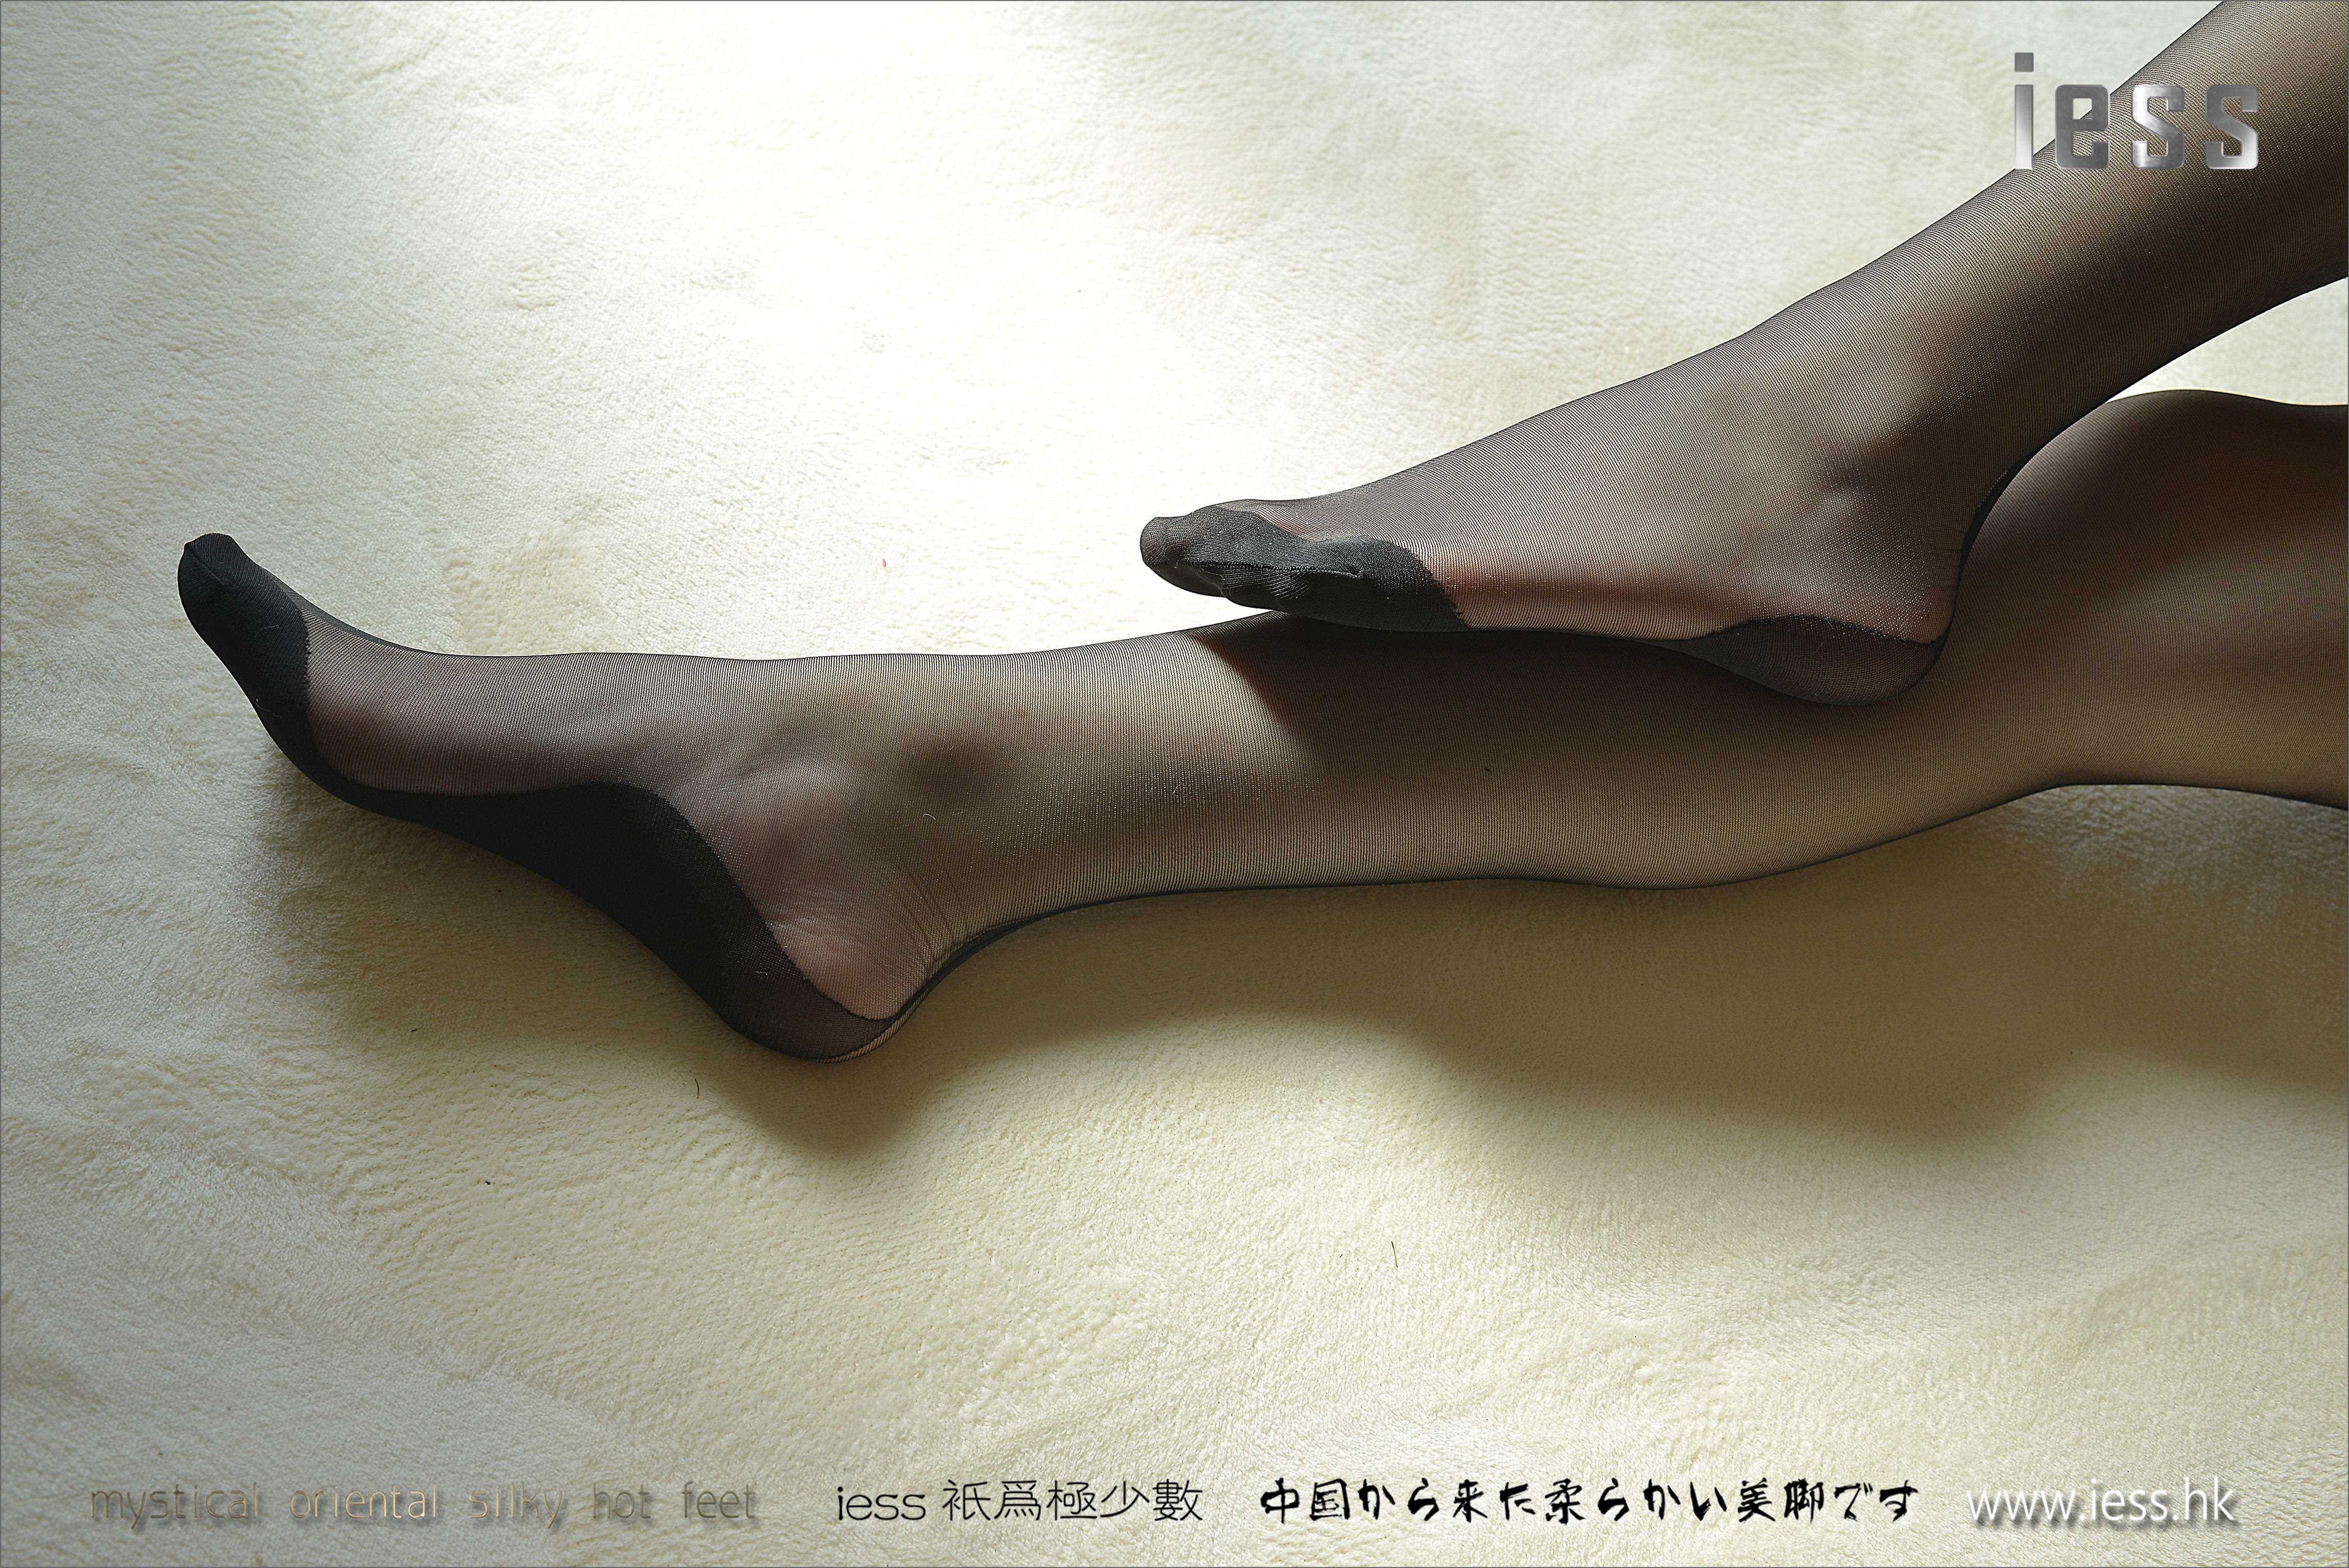 China Beauty Legs and feet 172